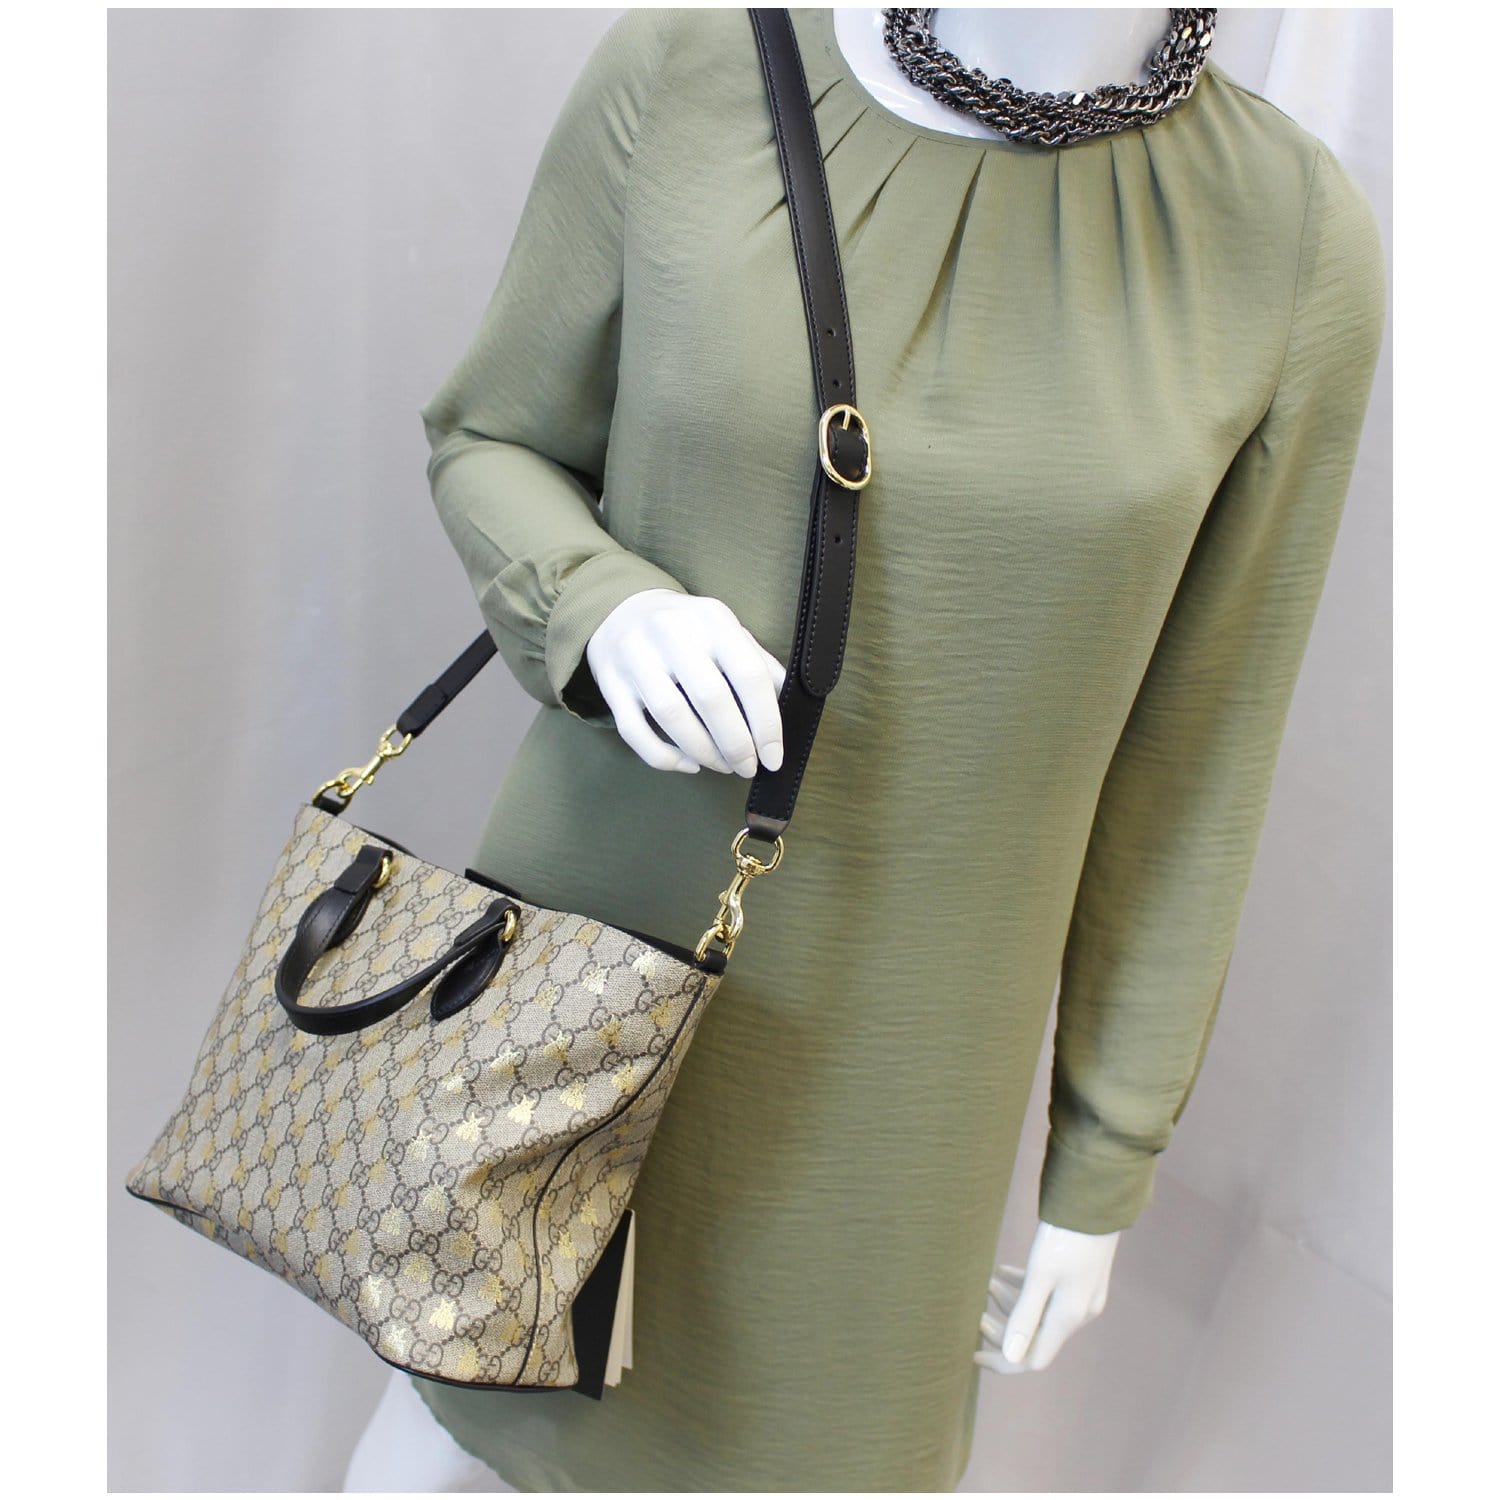 Totes bags Gucci - GG Supreme shopping bag - 473887K5I2G8526